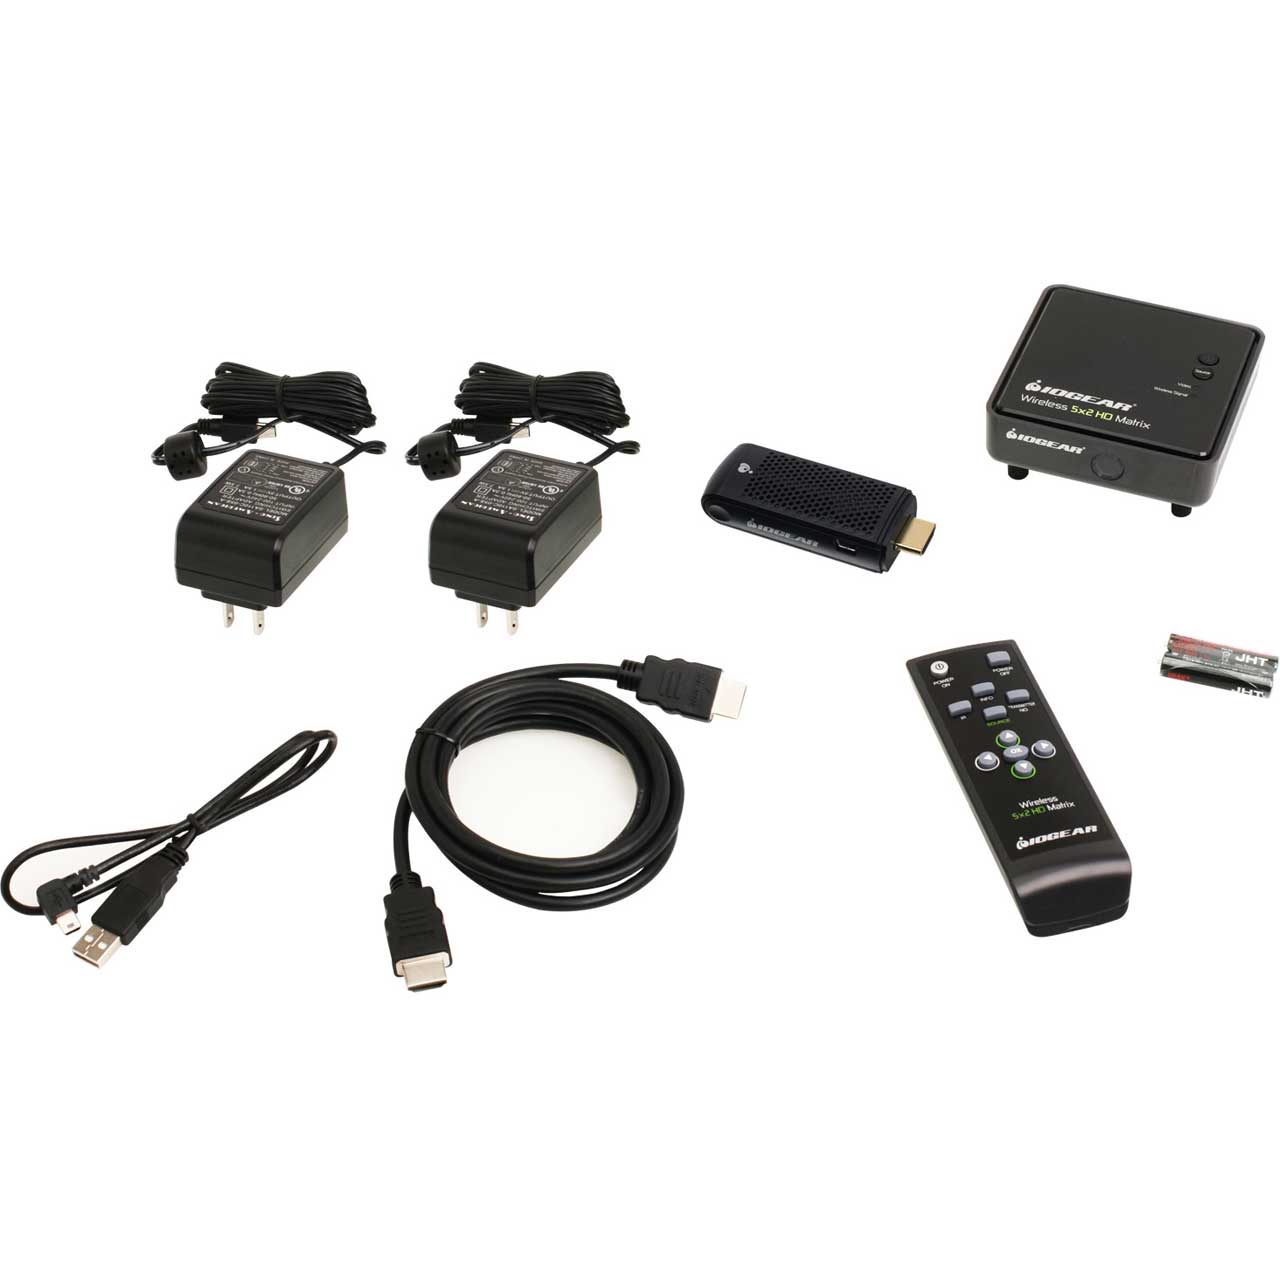 Lære Mængde penge forståelse IoGear GWHD11 Full HD 1080p HDMI Wireless Video Connection Kit with 3D for  1 TV